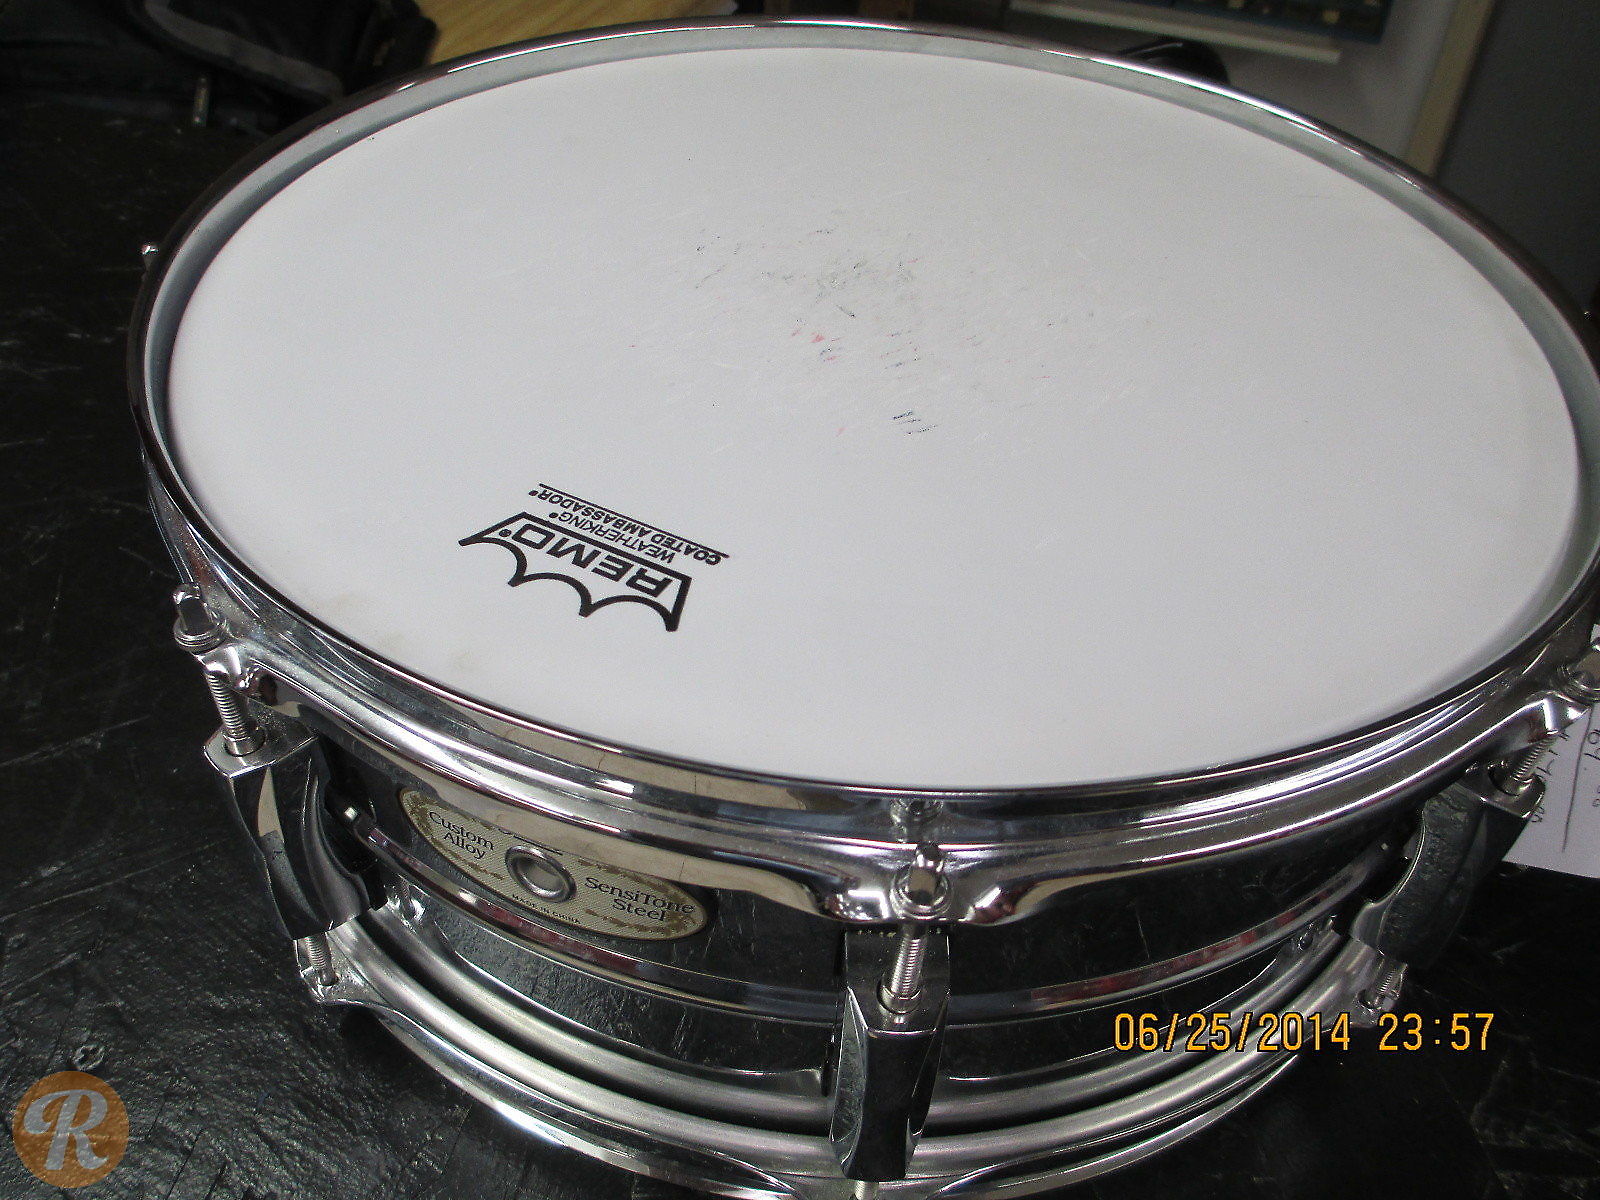 Used Pearl 14X6.5 Sensitone Heritage Alloy Drum Black 213